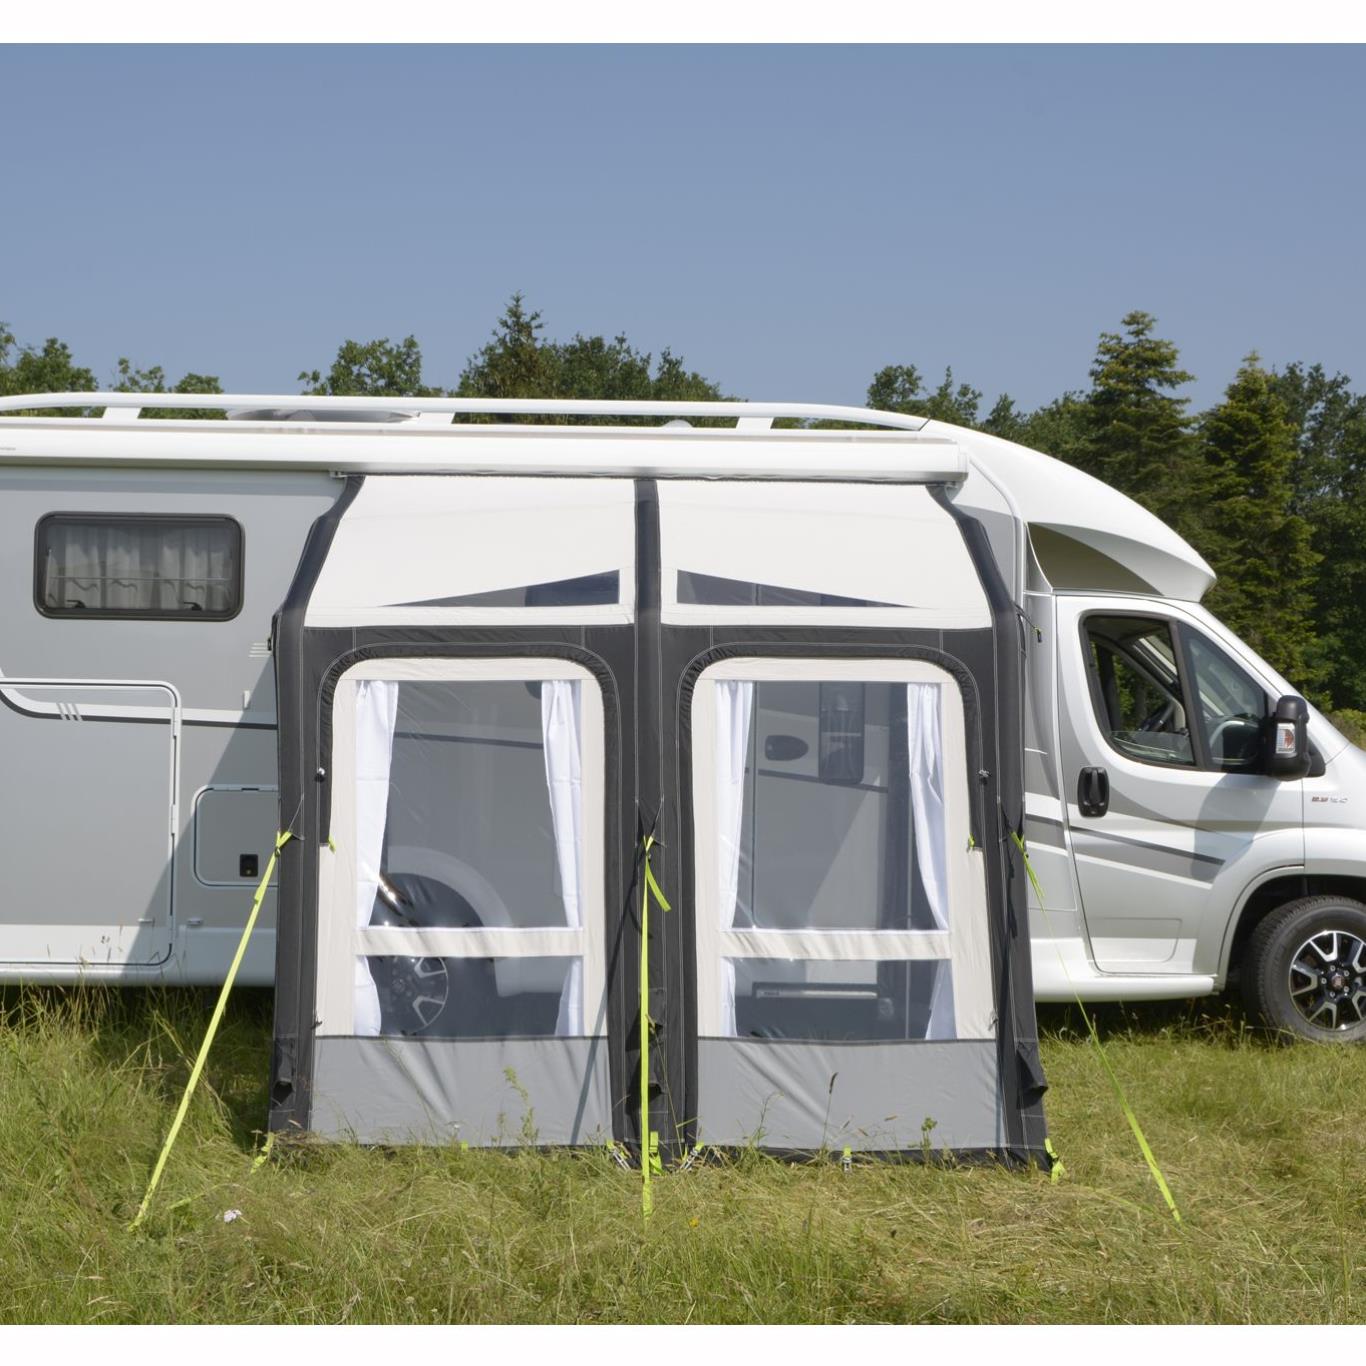 K k camping. Надувная палатка Dometic. Палатка kampa для автодома кемпера. Палатка для автодома кемпера. Дом на колесах с палаткой.